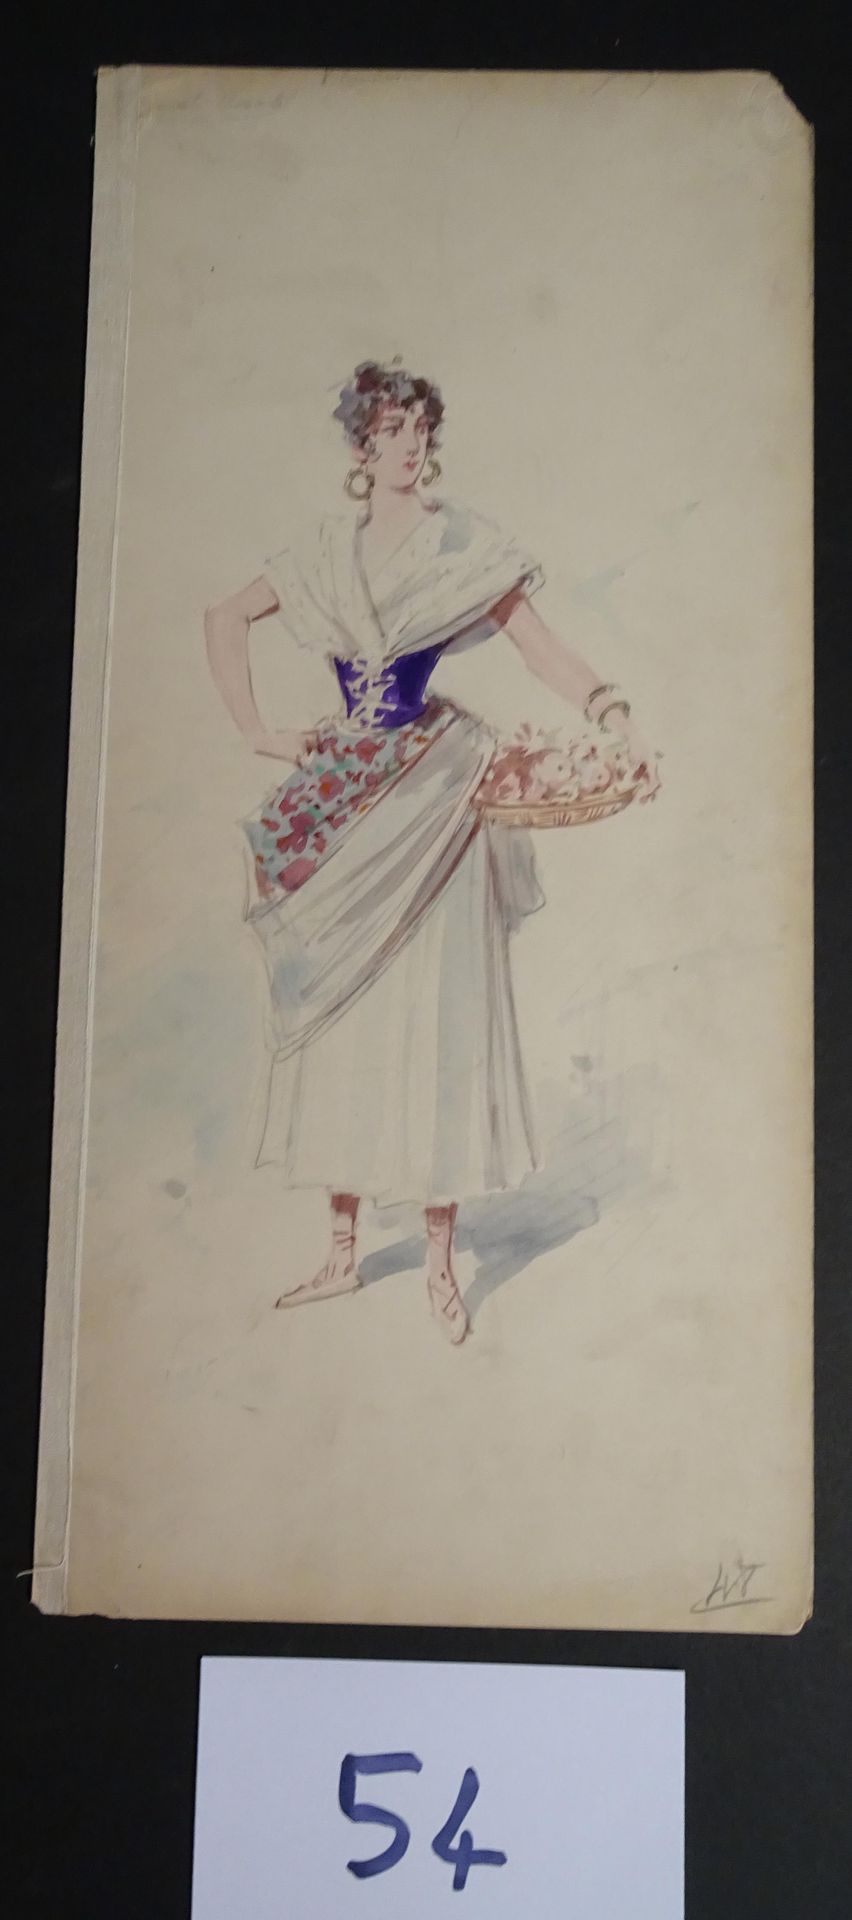 EDEL 埃德尔-阿尔弗雷多(1859-1912)

"拿着一篮子水果的女人"。水粉，水彩和墨水。约1891年。43 x 20厘米。